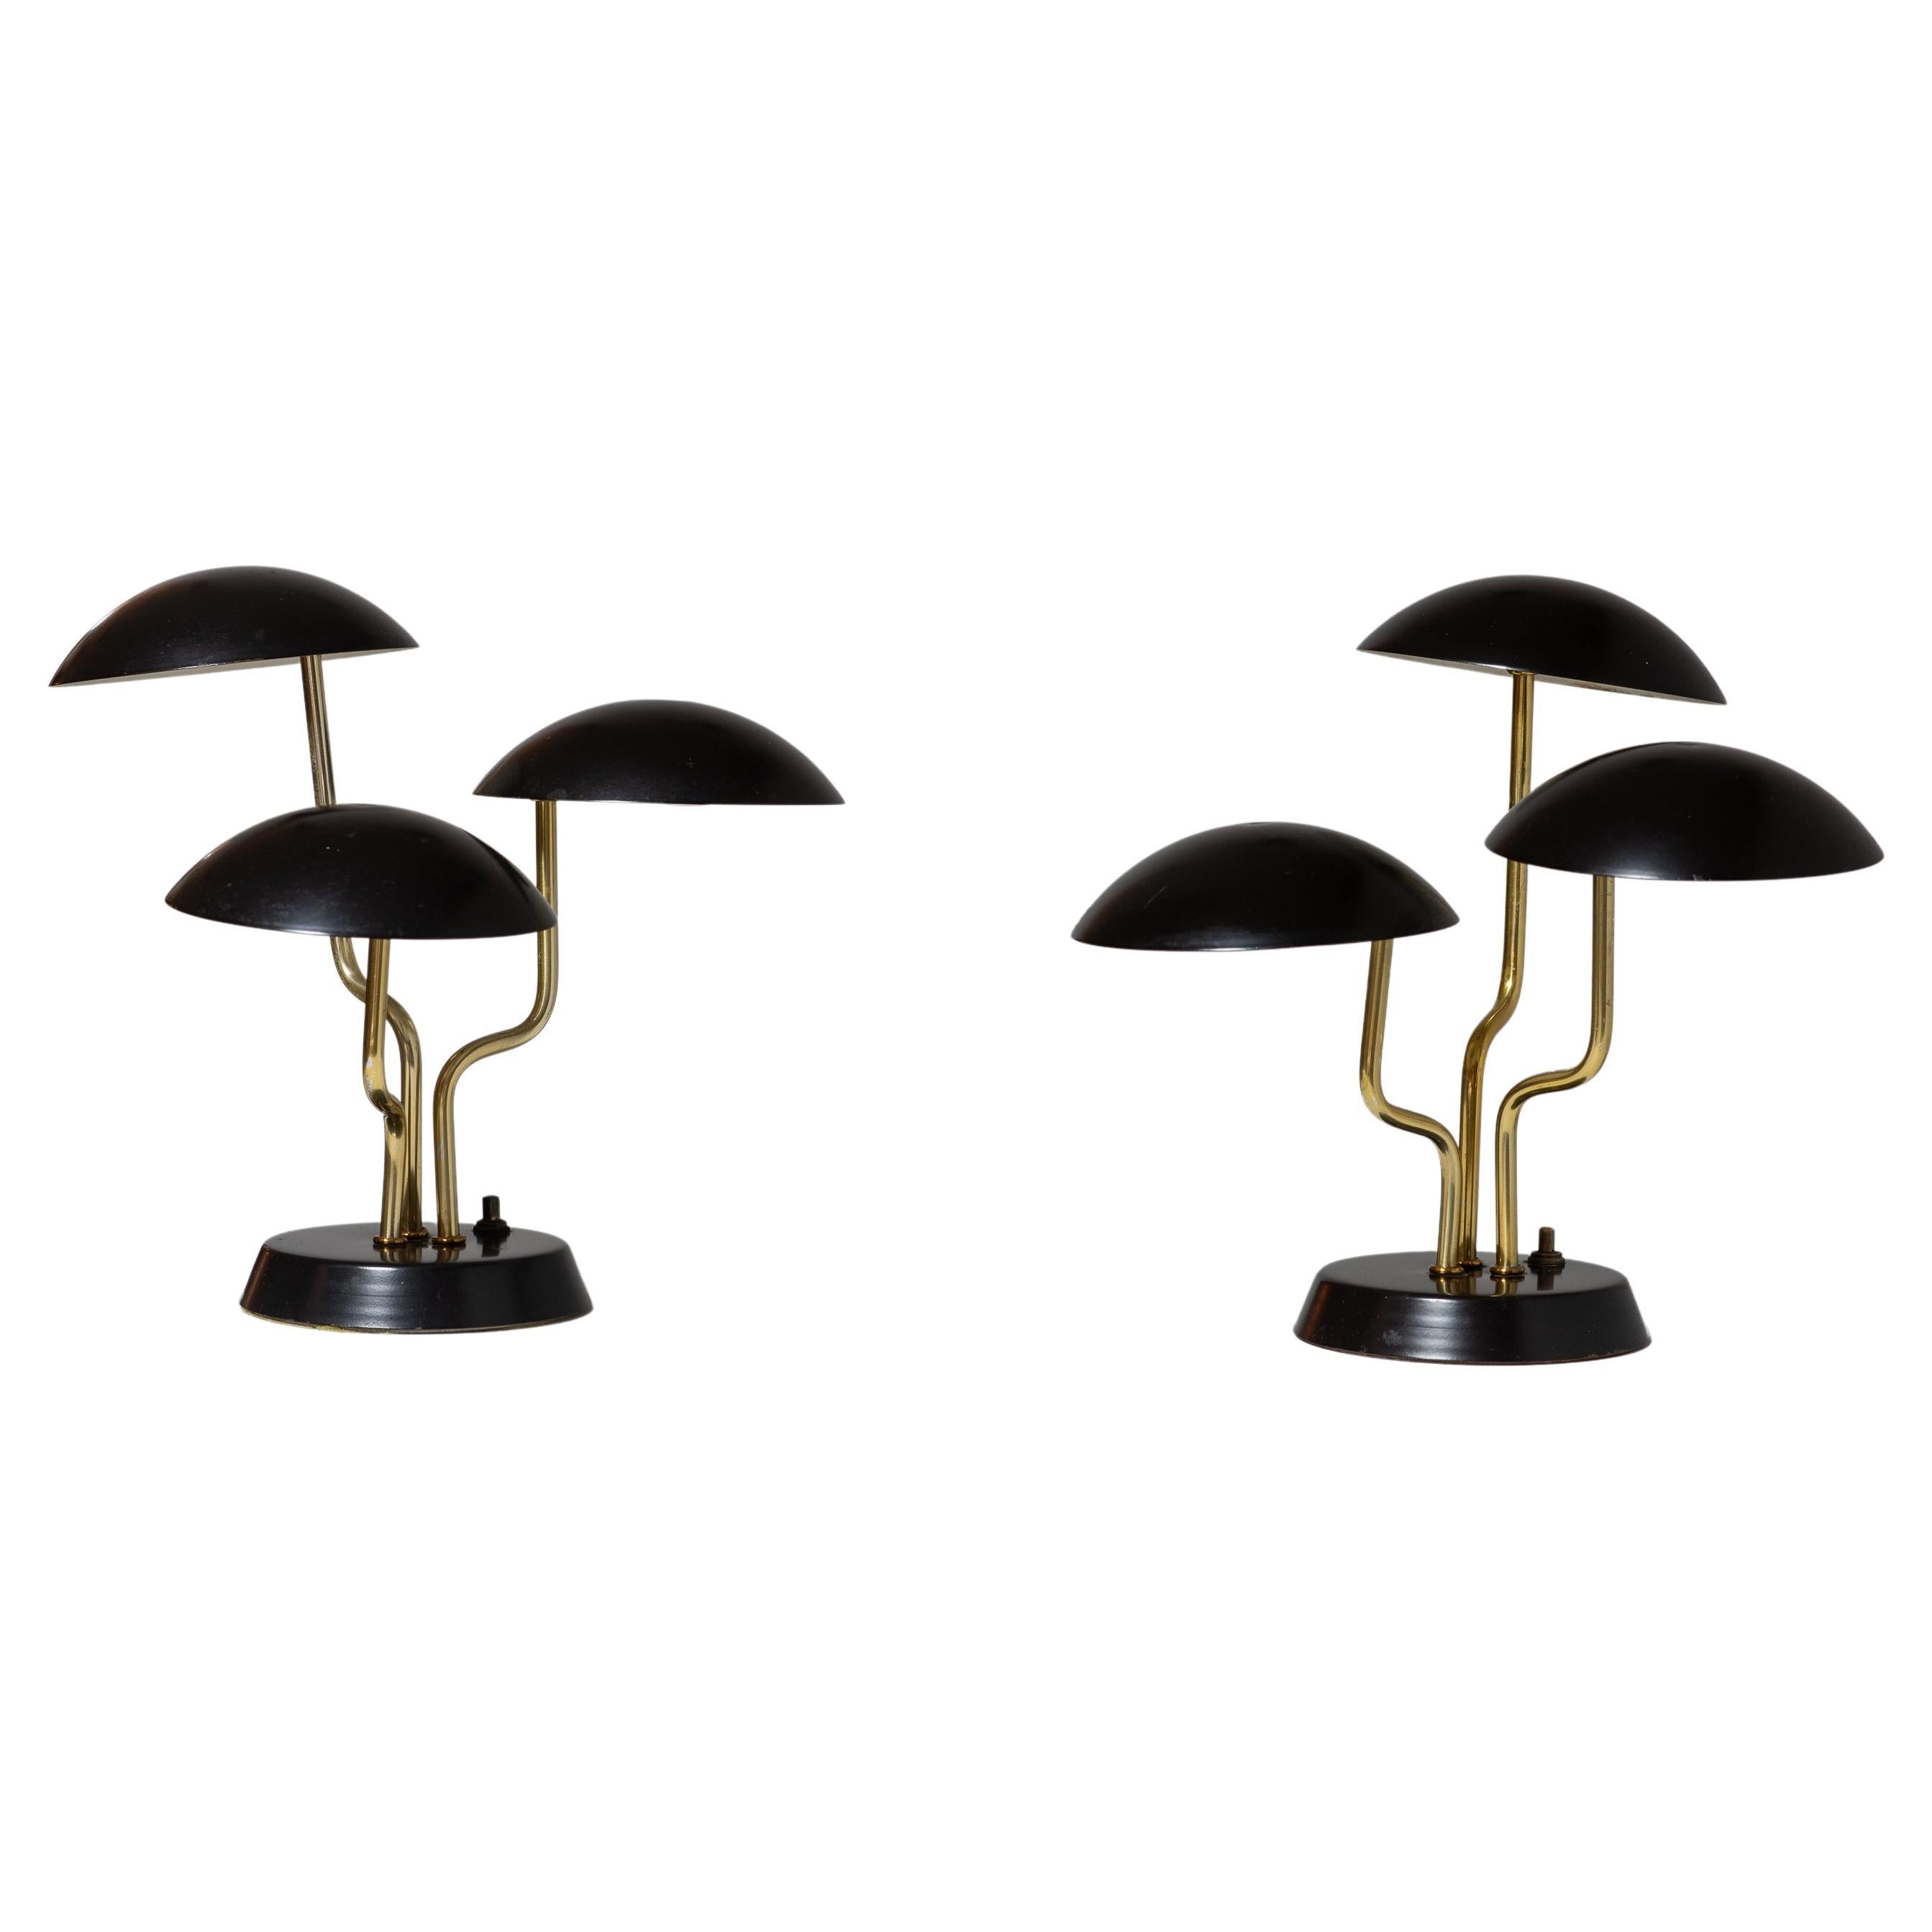 Gino Sarfatti Three Shade Mushroom Lamp in Black and Brass - Pair For Sale